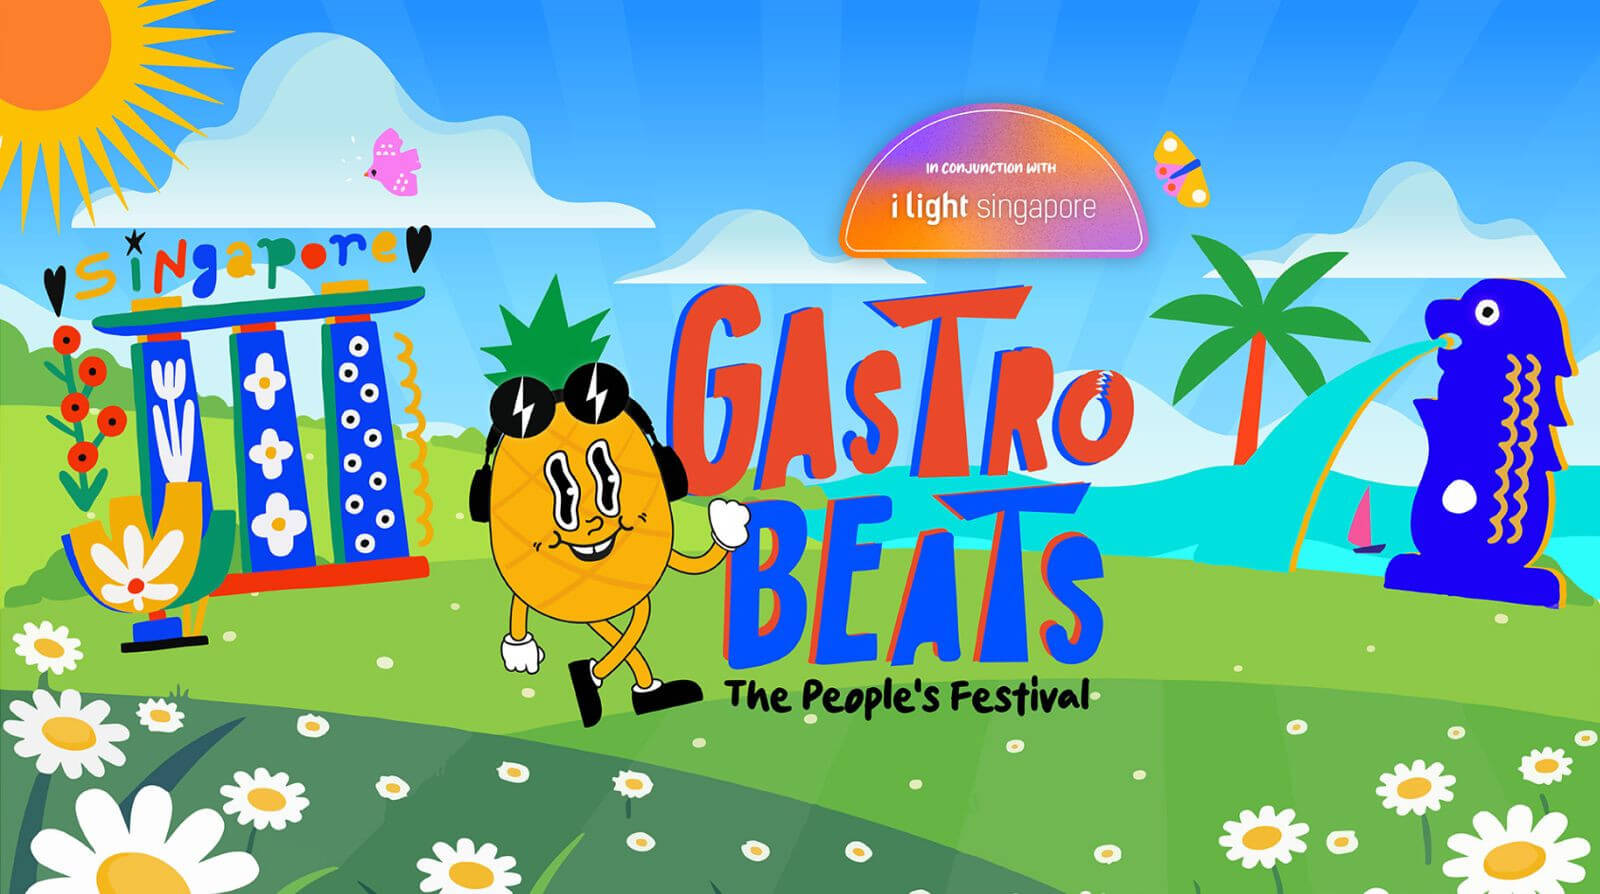 gastro-beats-singapore